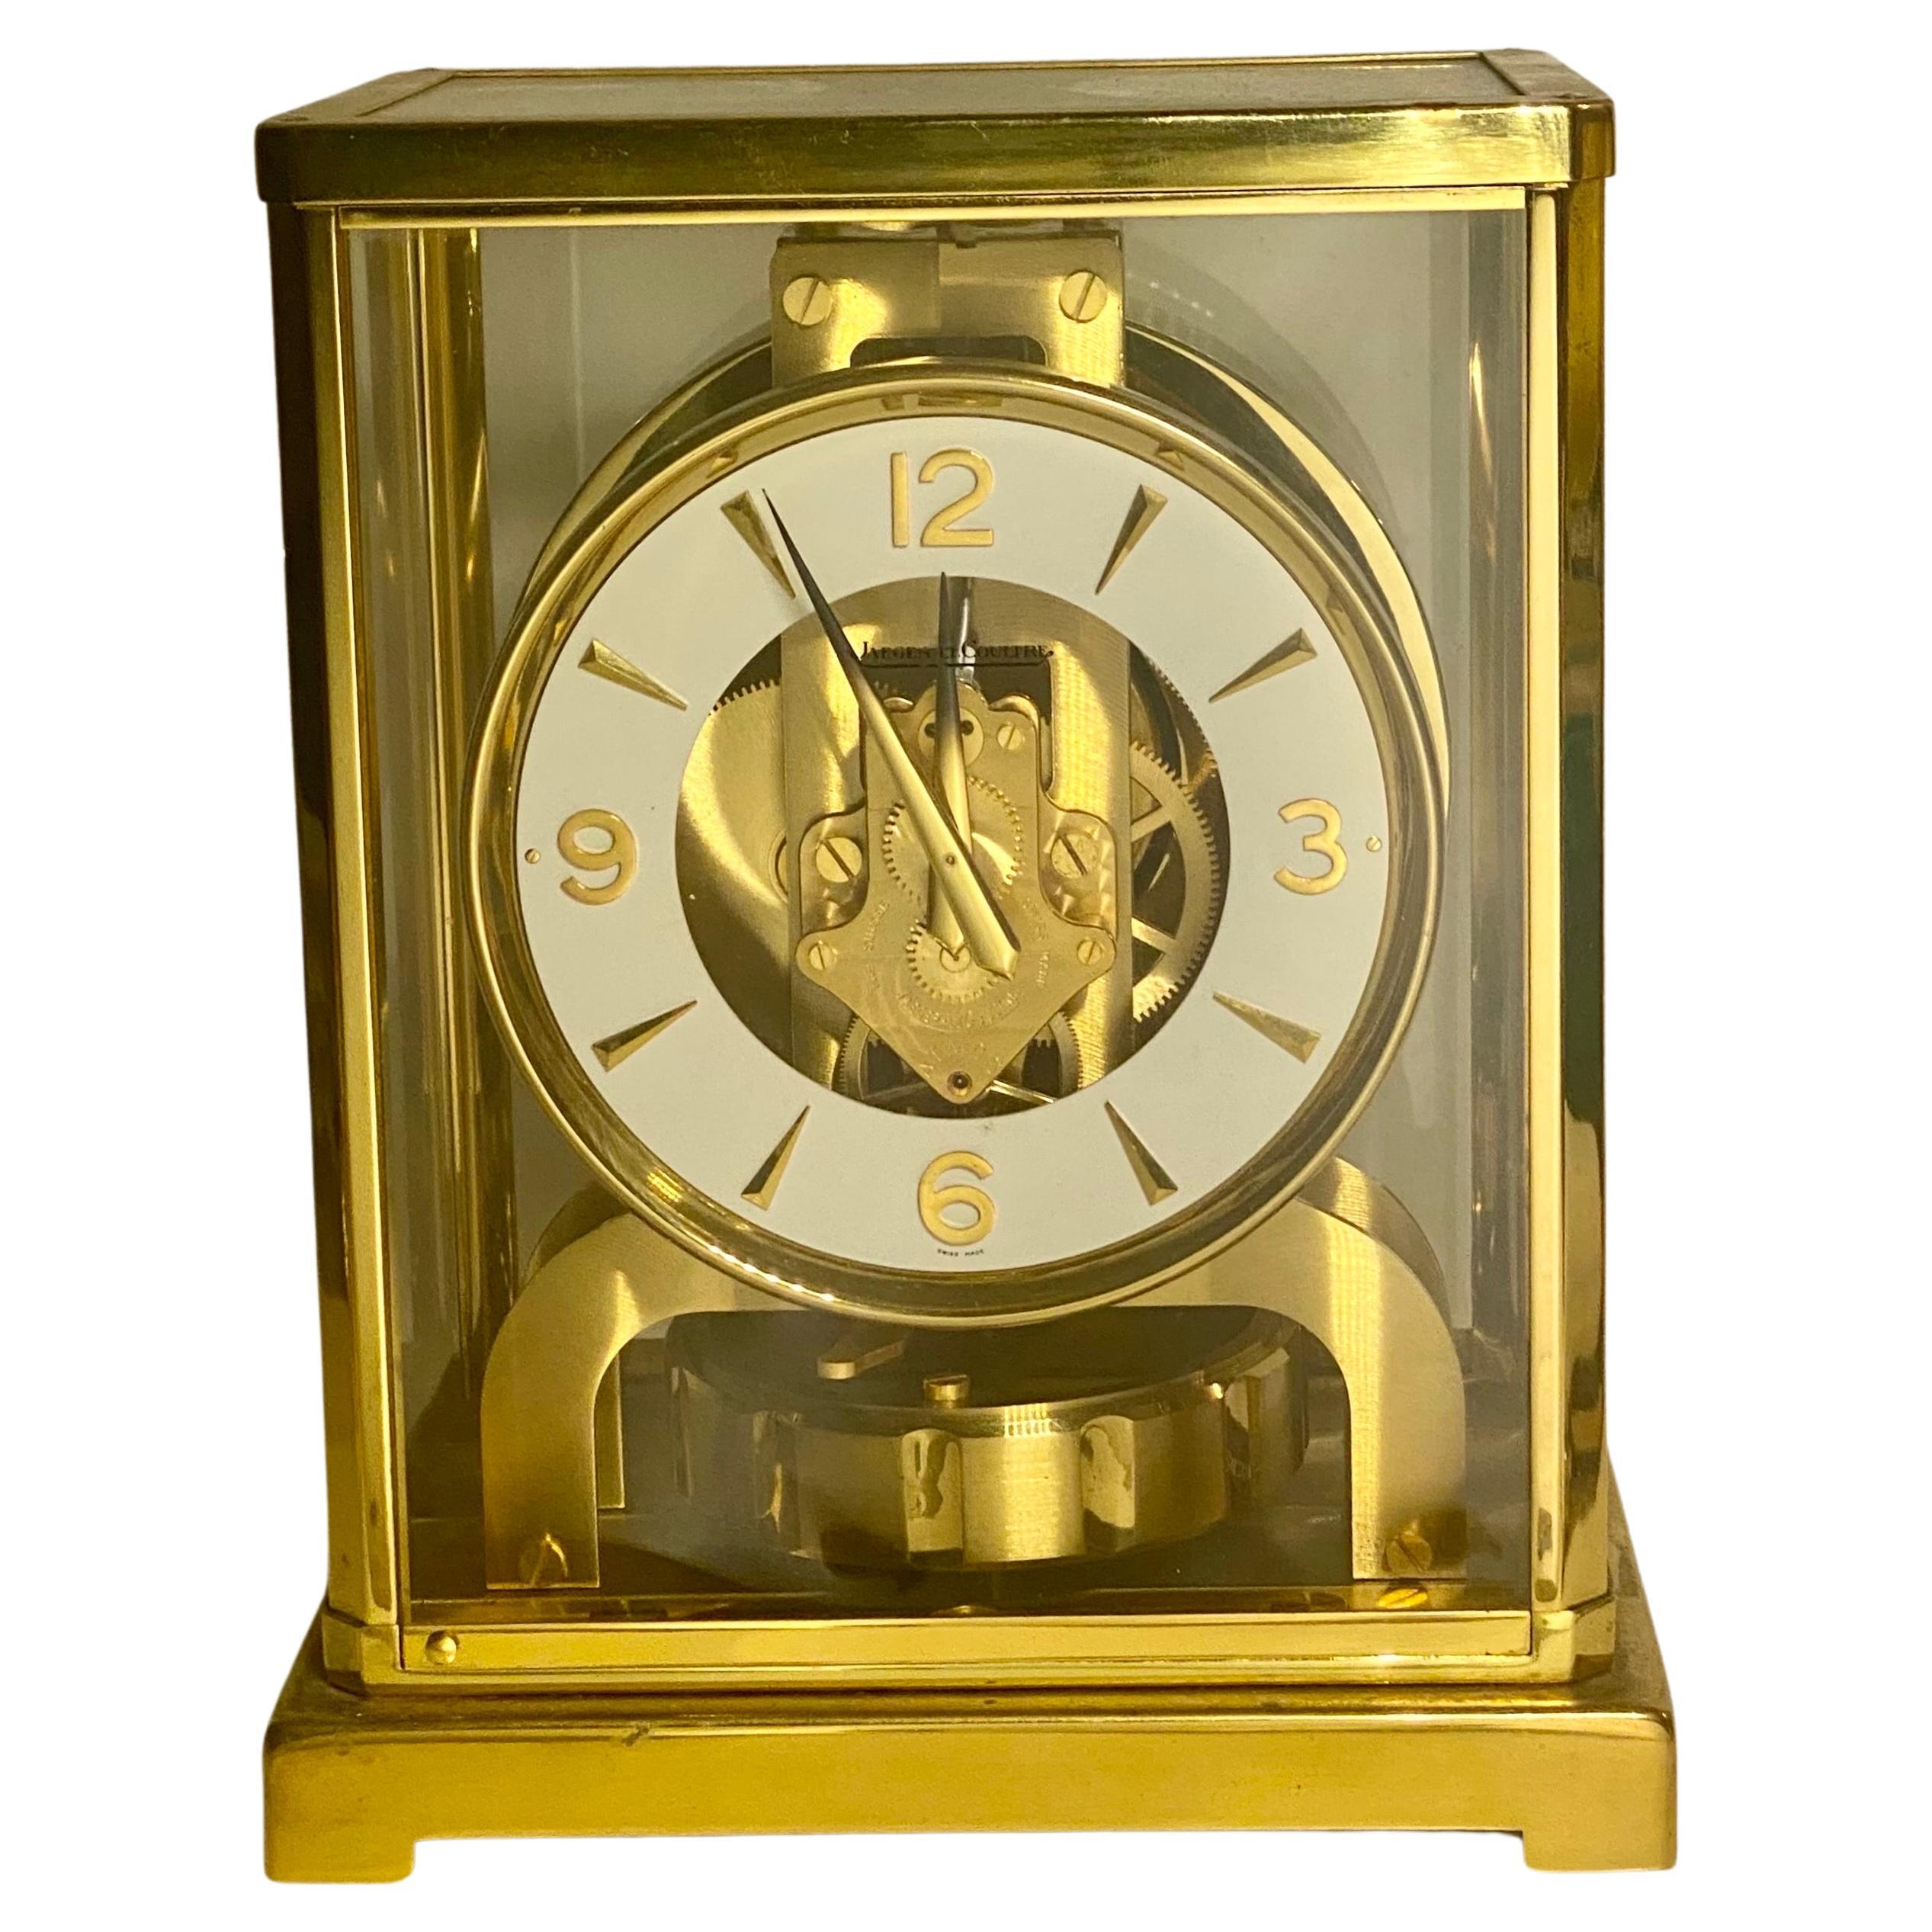 Jaeger LeCoultre Atmos (526-525) Perpetual Motion Mantle Clock Circa 1950's